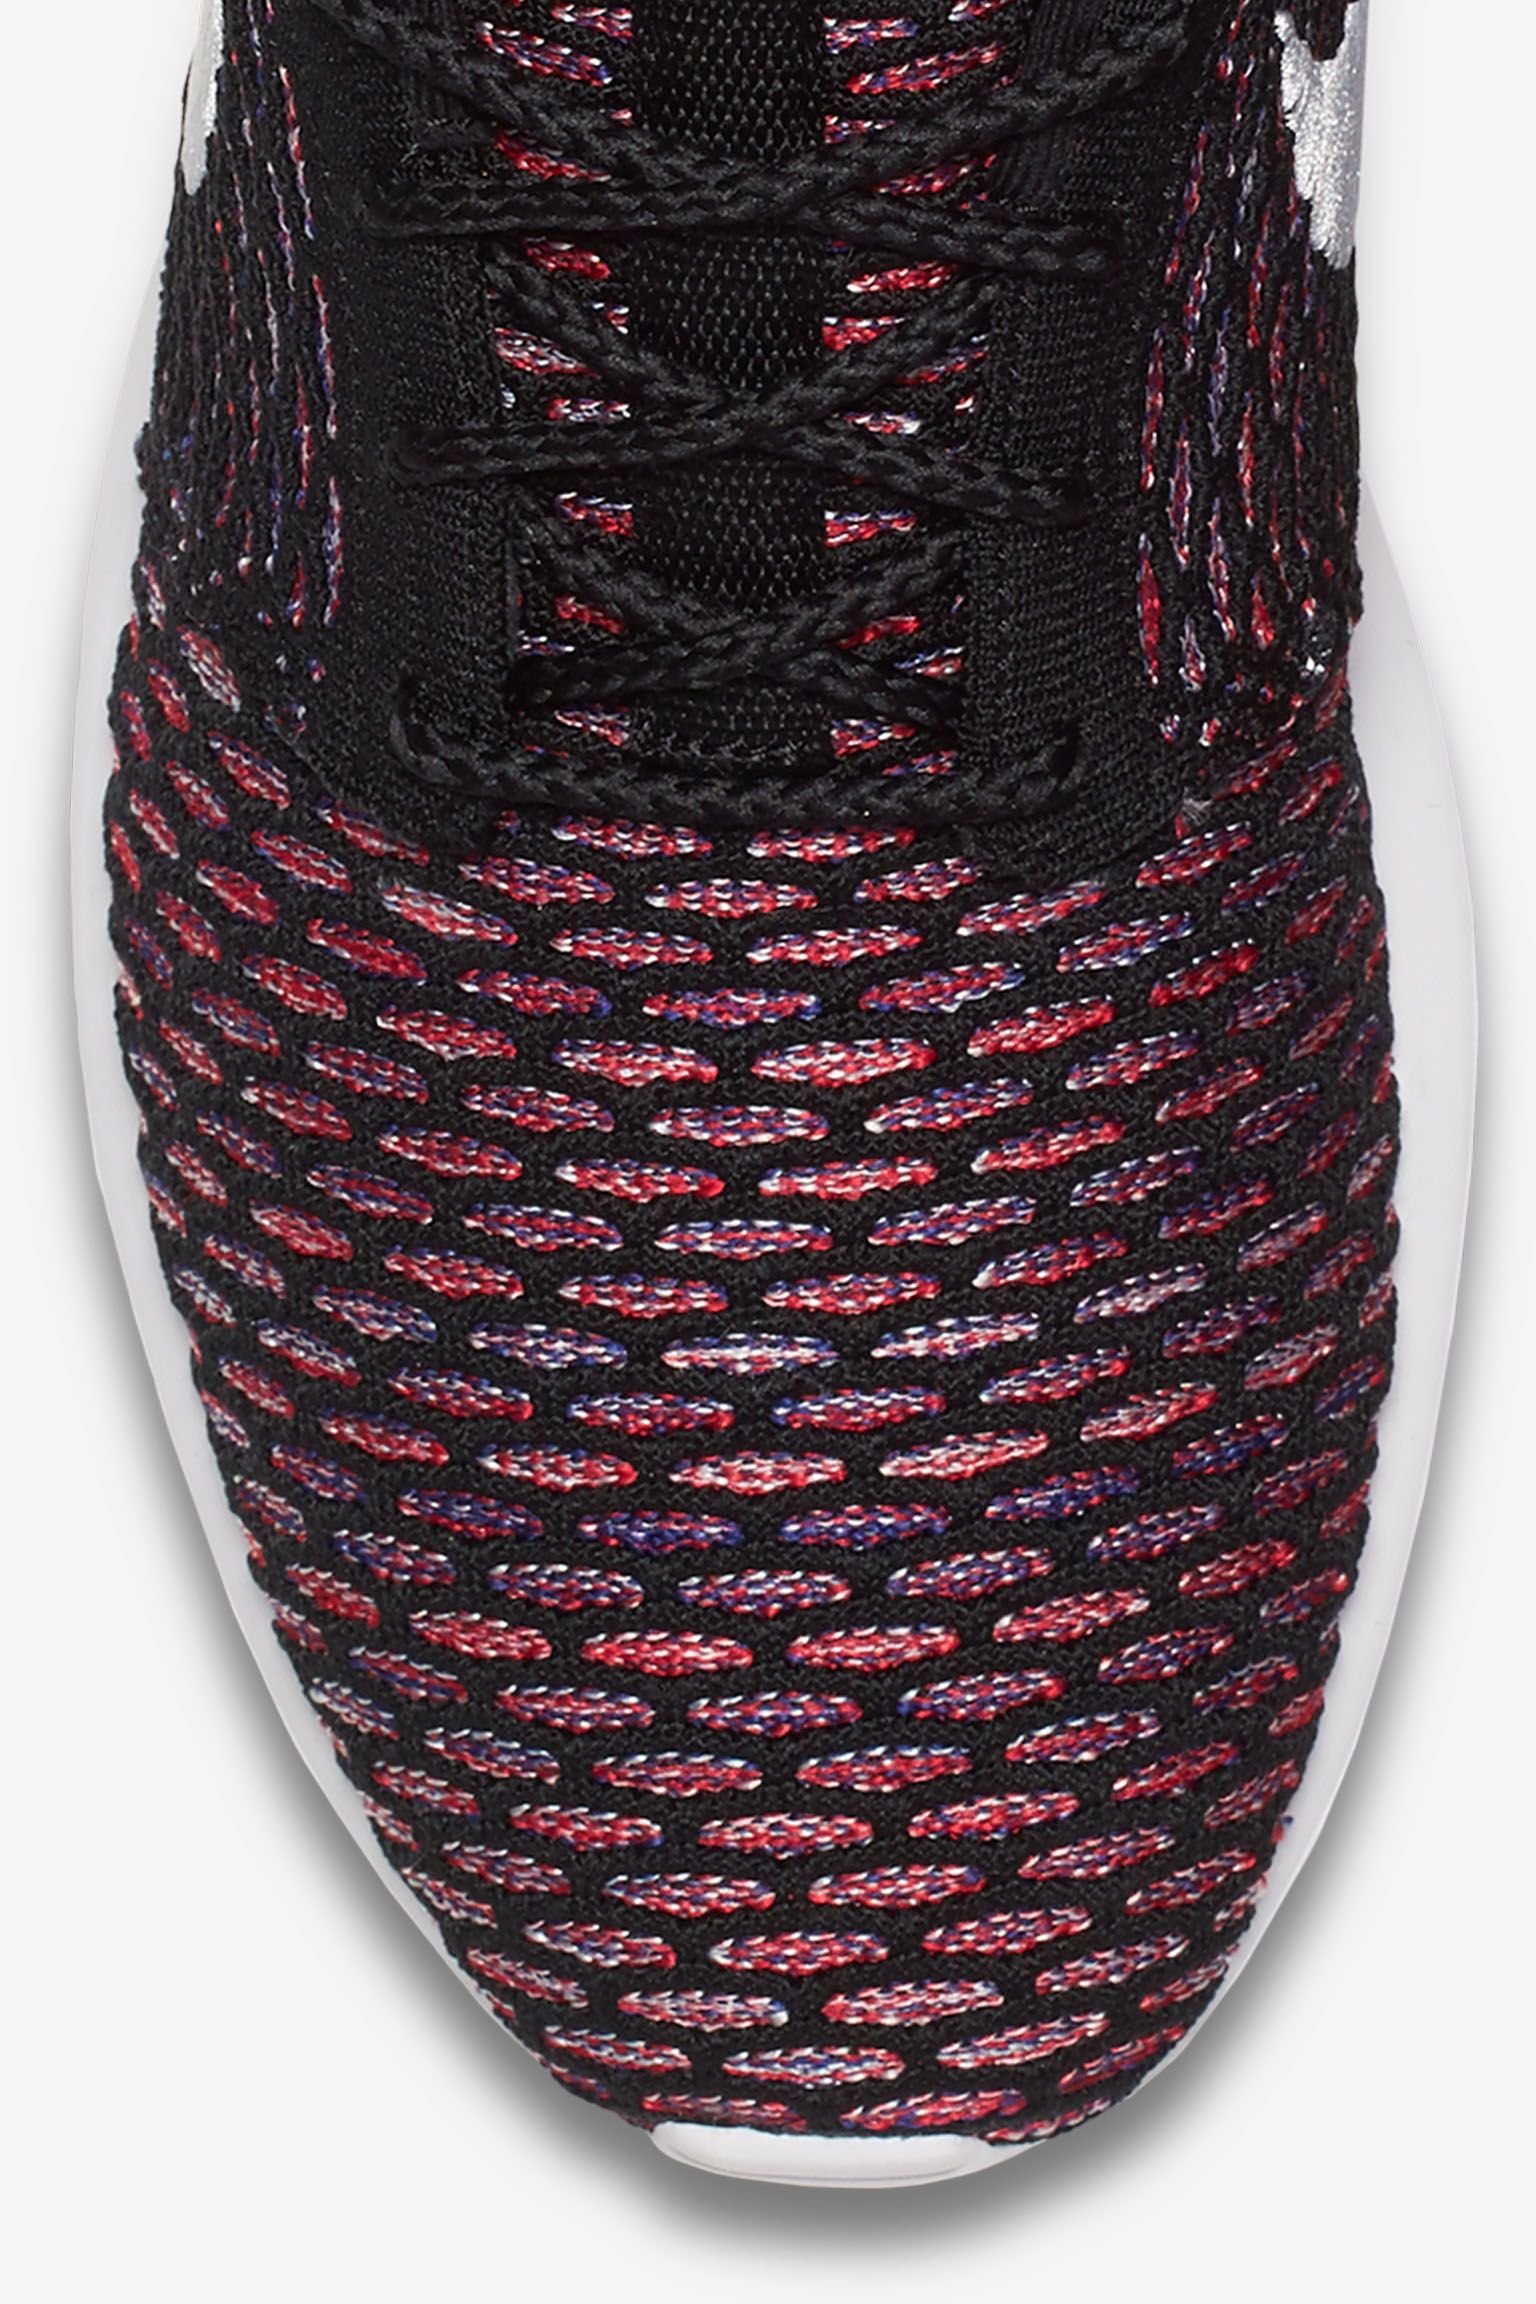 Nike Roshe One Flyknit 'Vibrant Multi-Color'. SNKRS